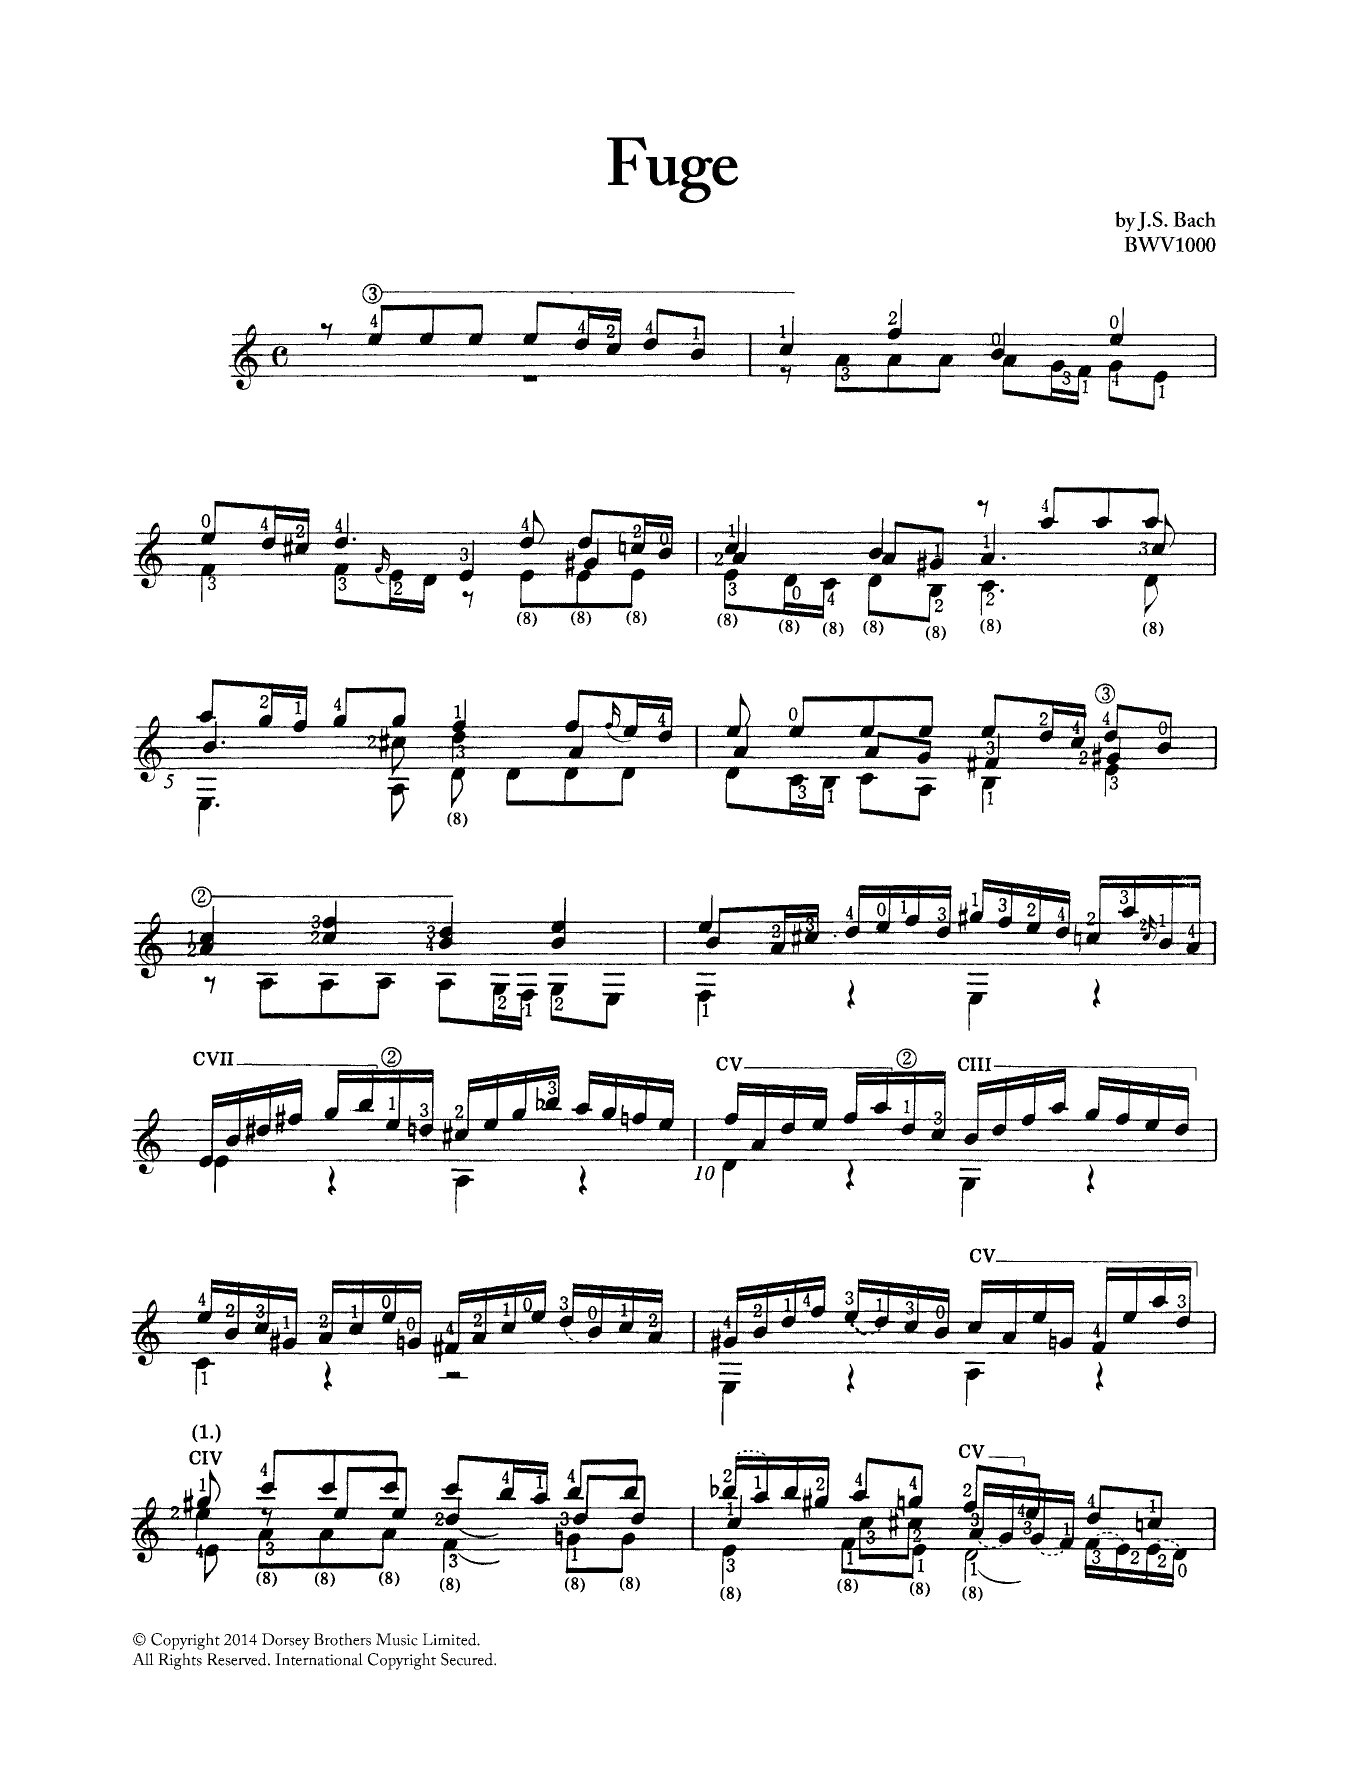 Johann Sebastian Bach Fugue In A Minor BWV 1000 sheet music notes and chords arranged for Solo Guitar